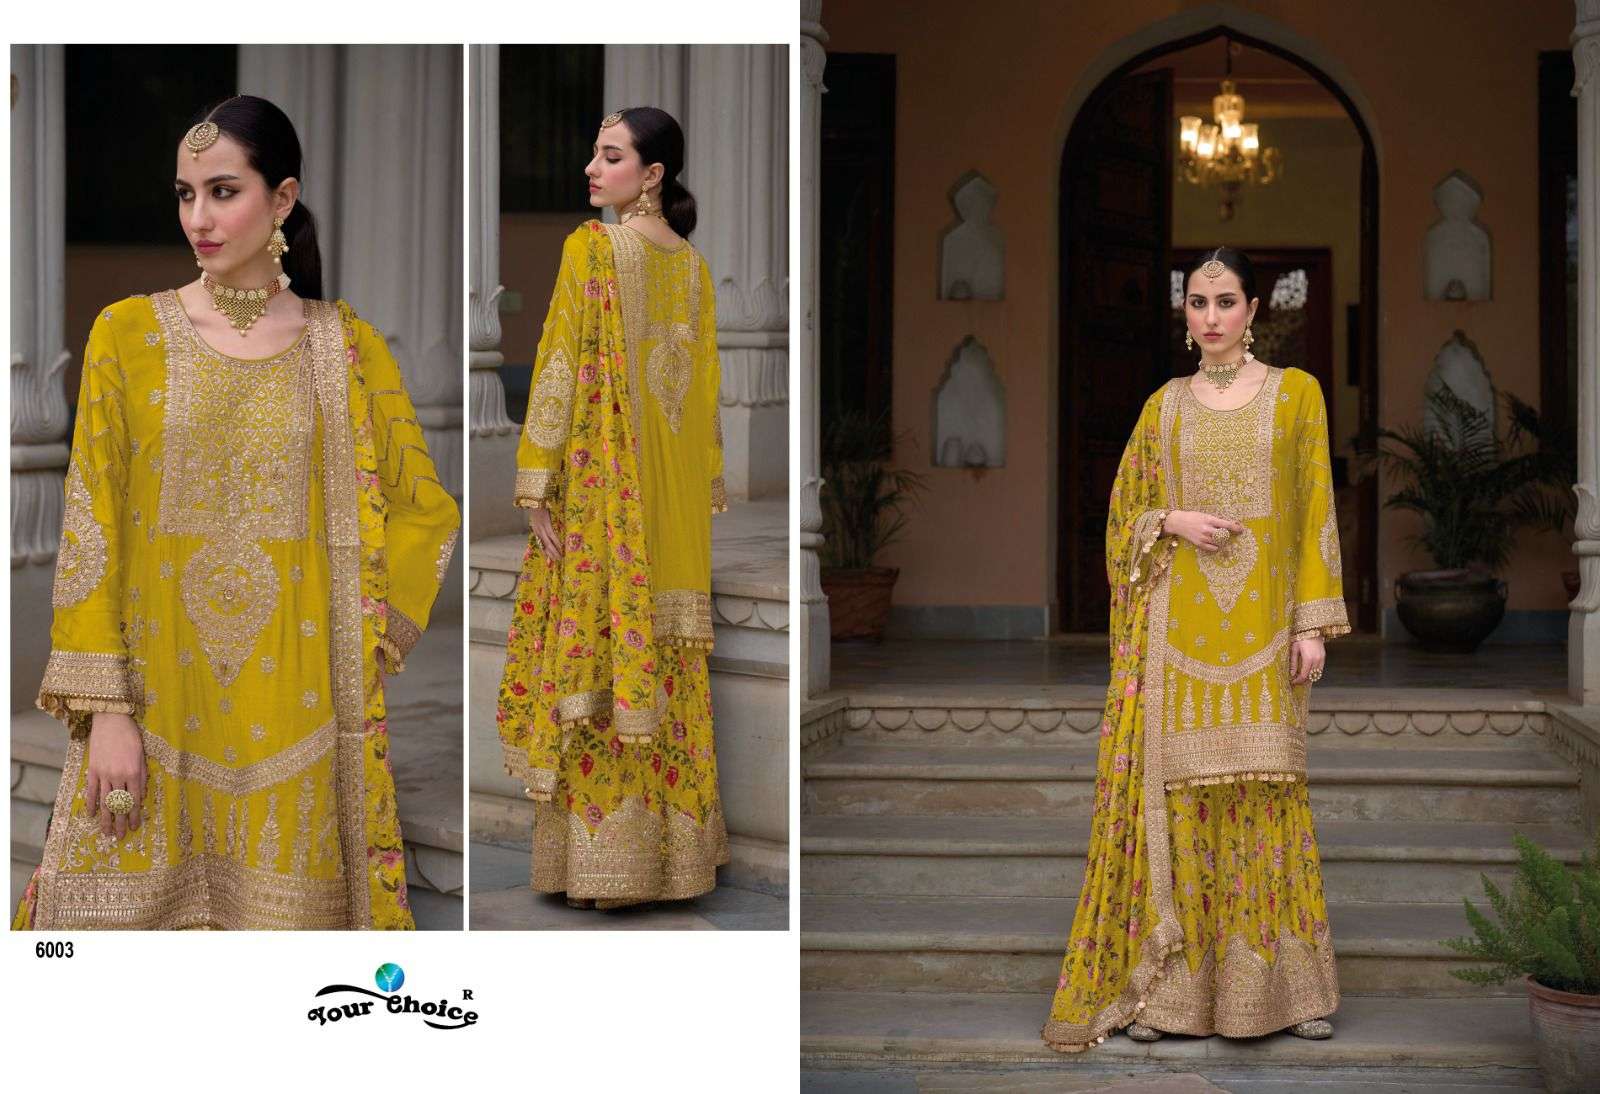 Your Choice Sadaf Gold Designer Chinon Salwar Suit Wholesale catalog